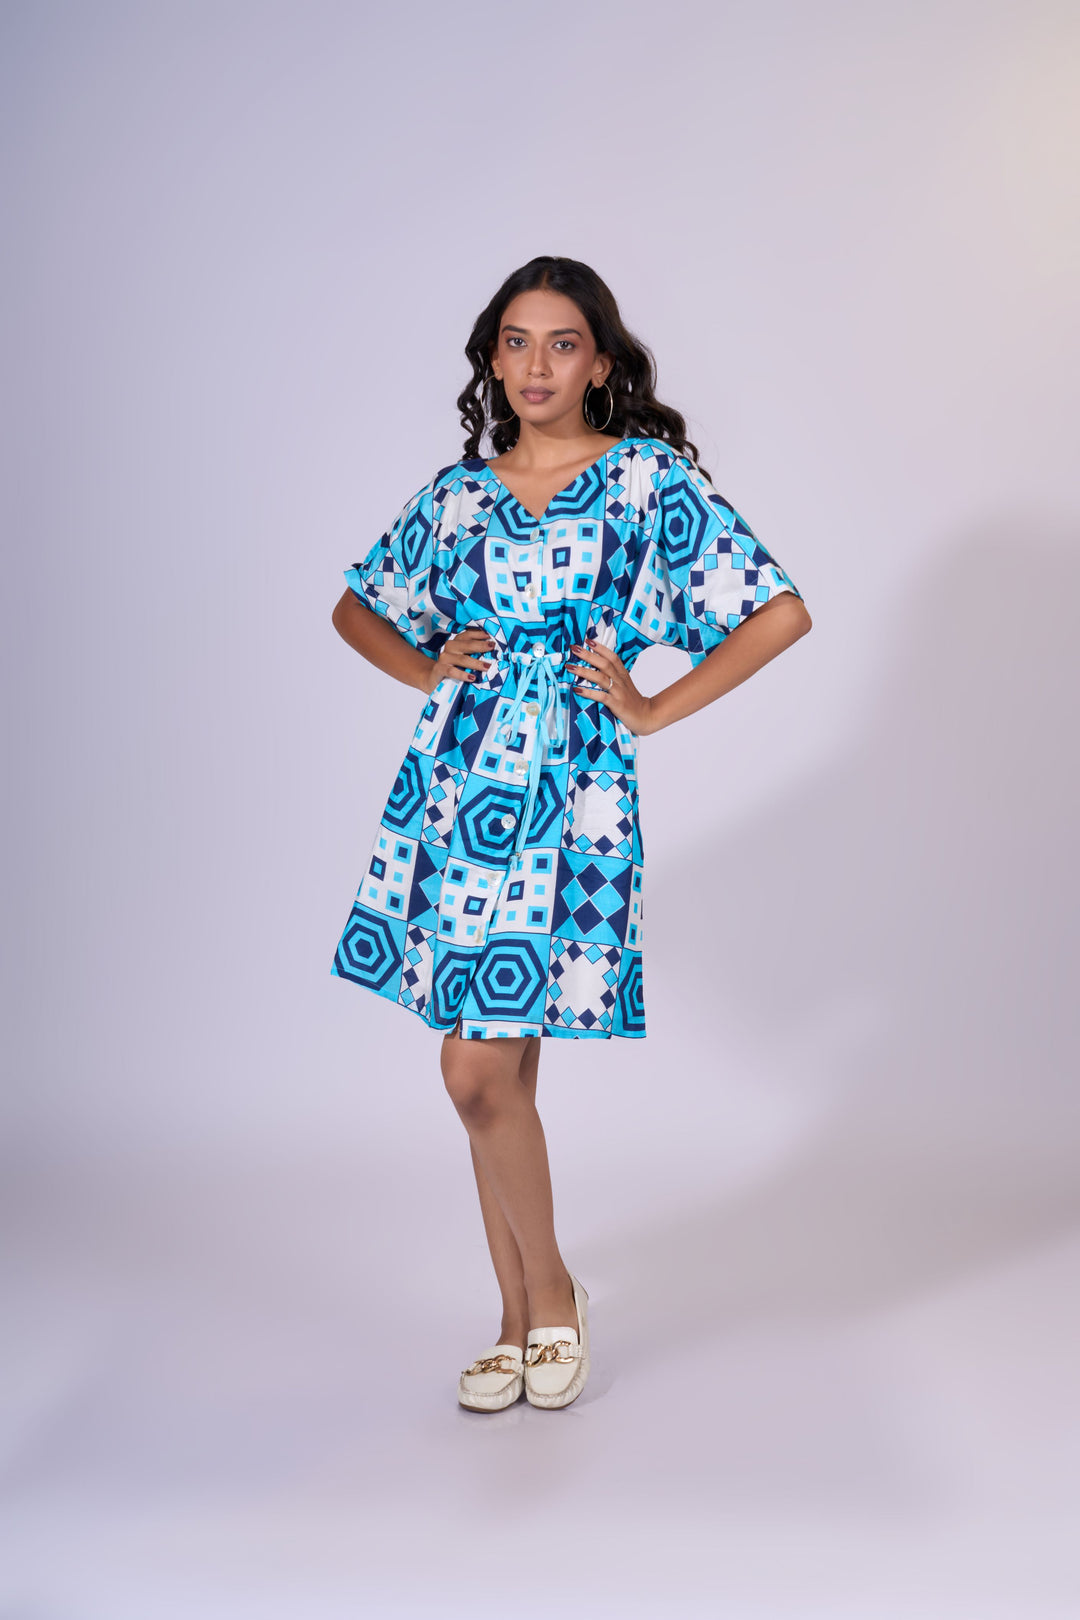 Aqua Radiance Dress - MAGS By Sananda Basak